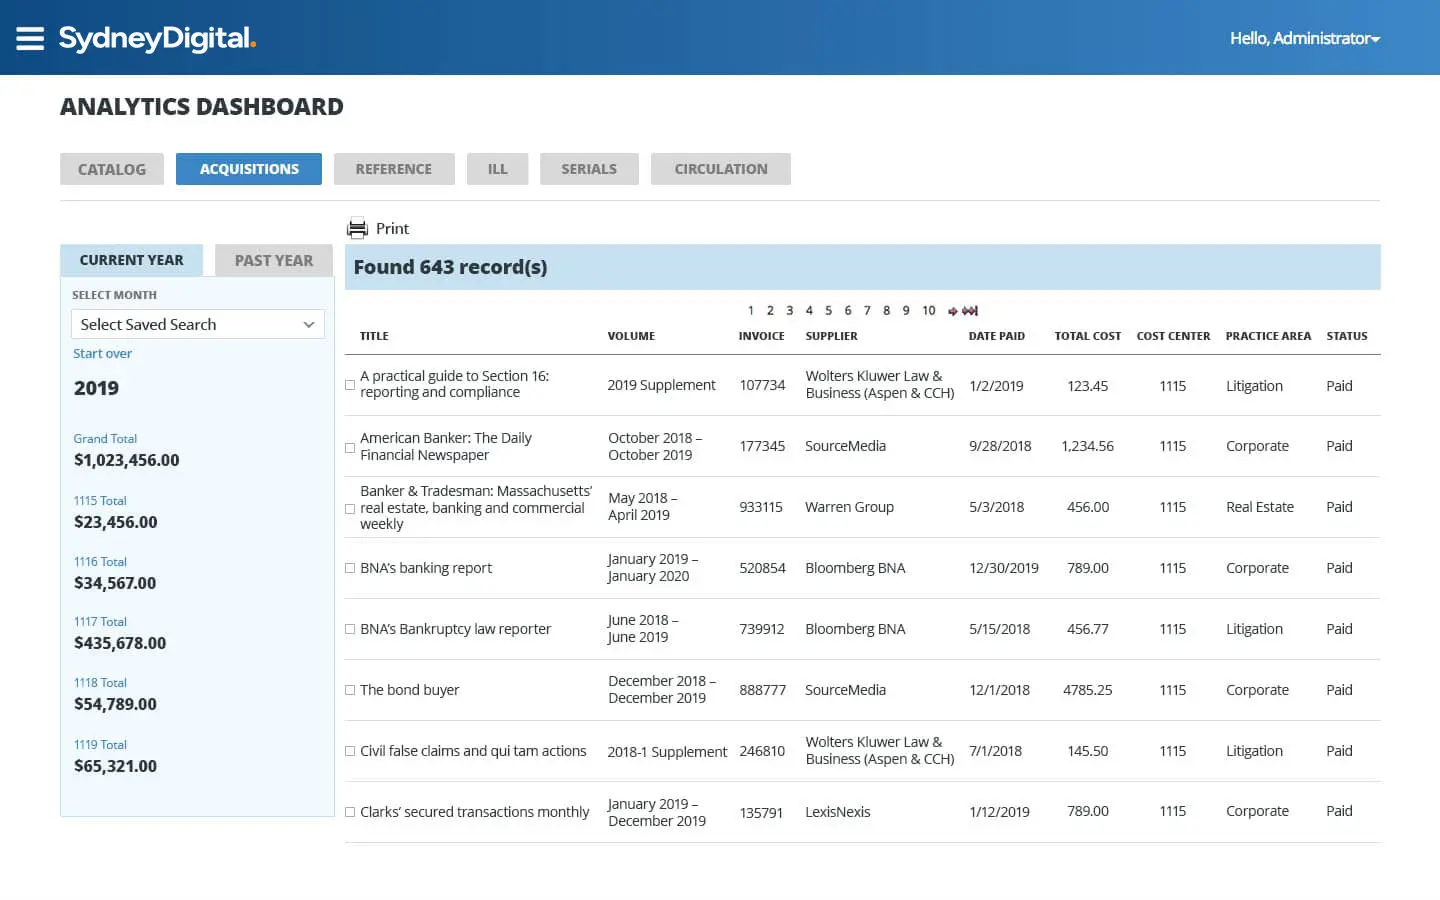 An image of an example Analytics dashboard in SydneyDigital